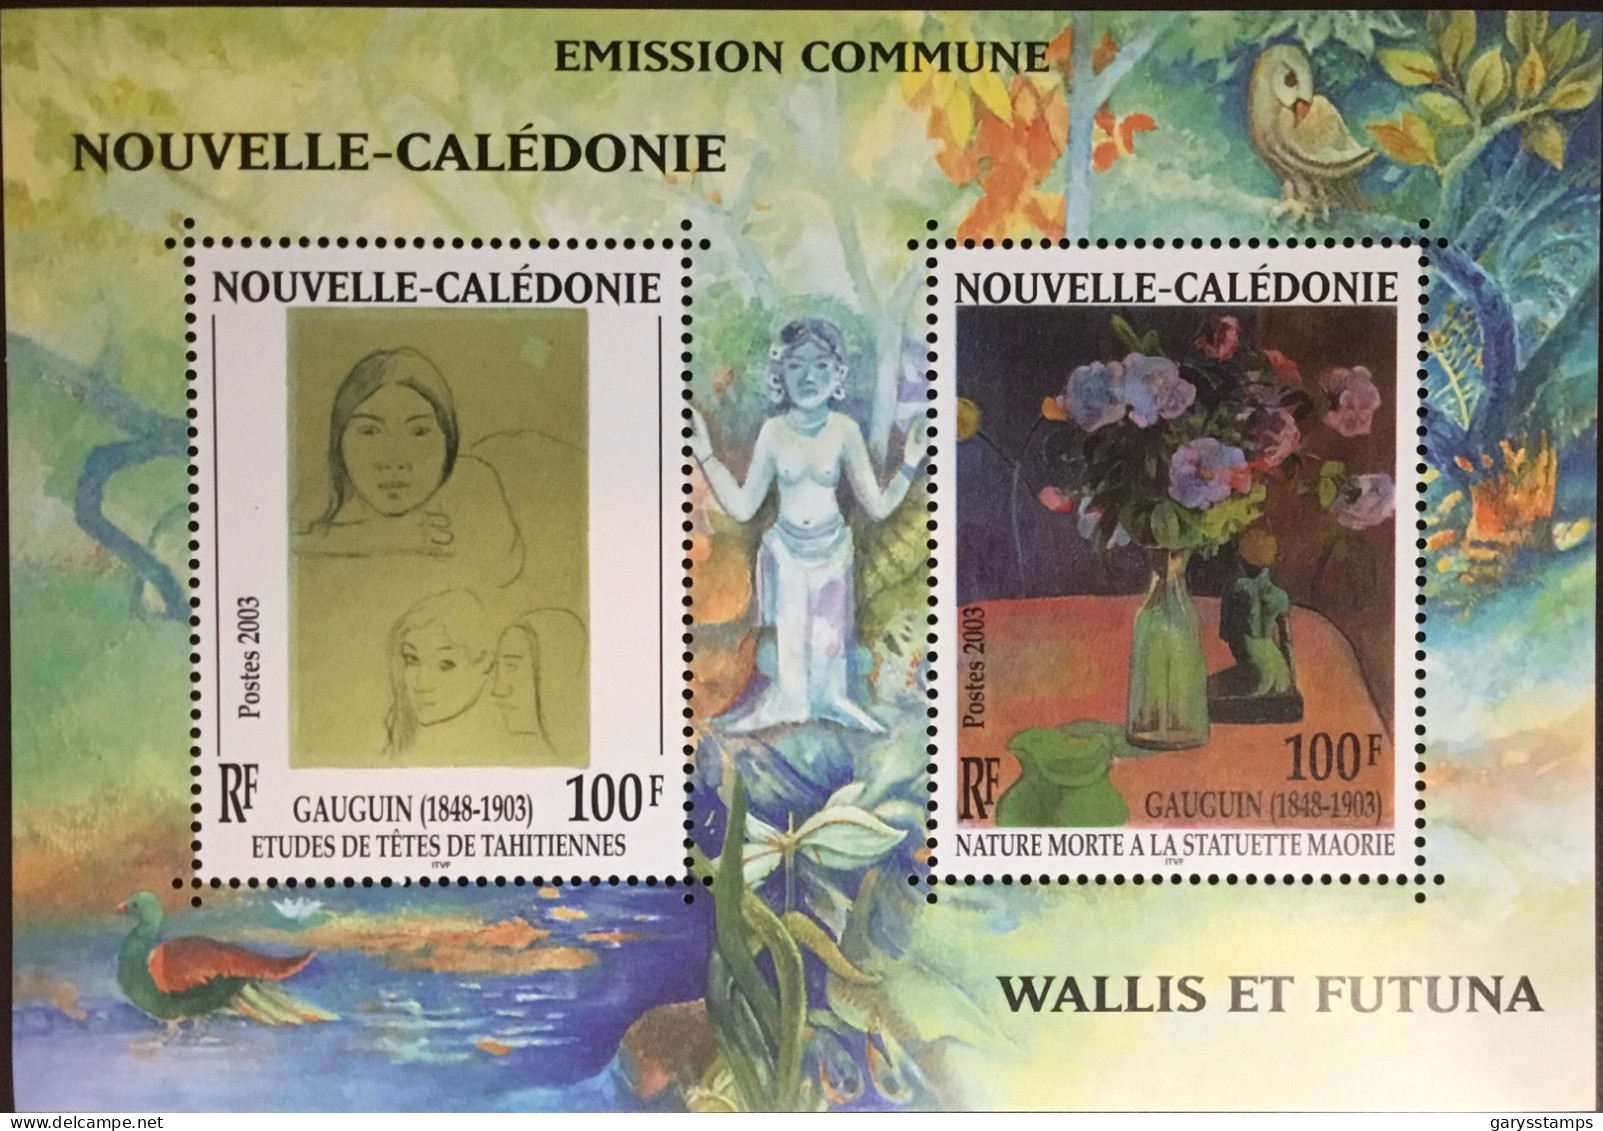 New Caledonia Caledonie 2003 Gauguin Centenary Joint Issue Minisheet MNH - Neufs